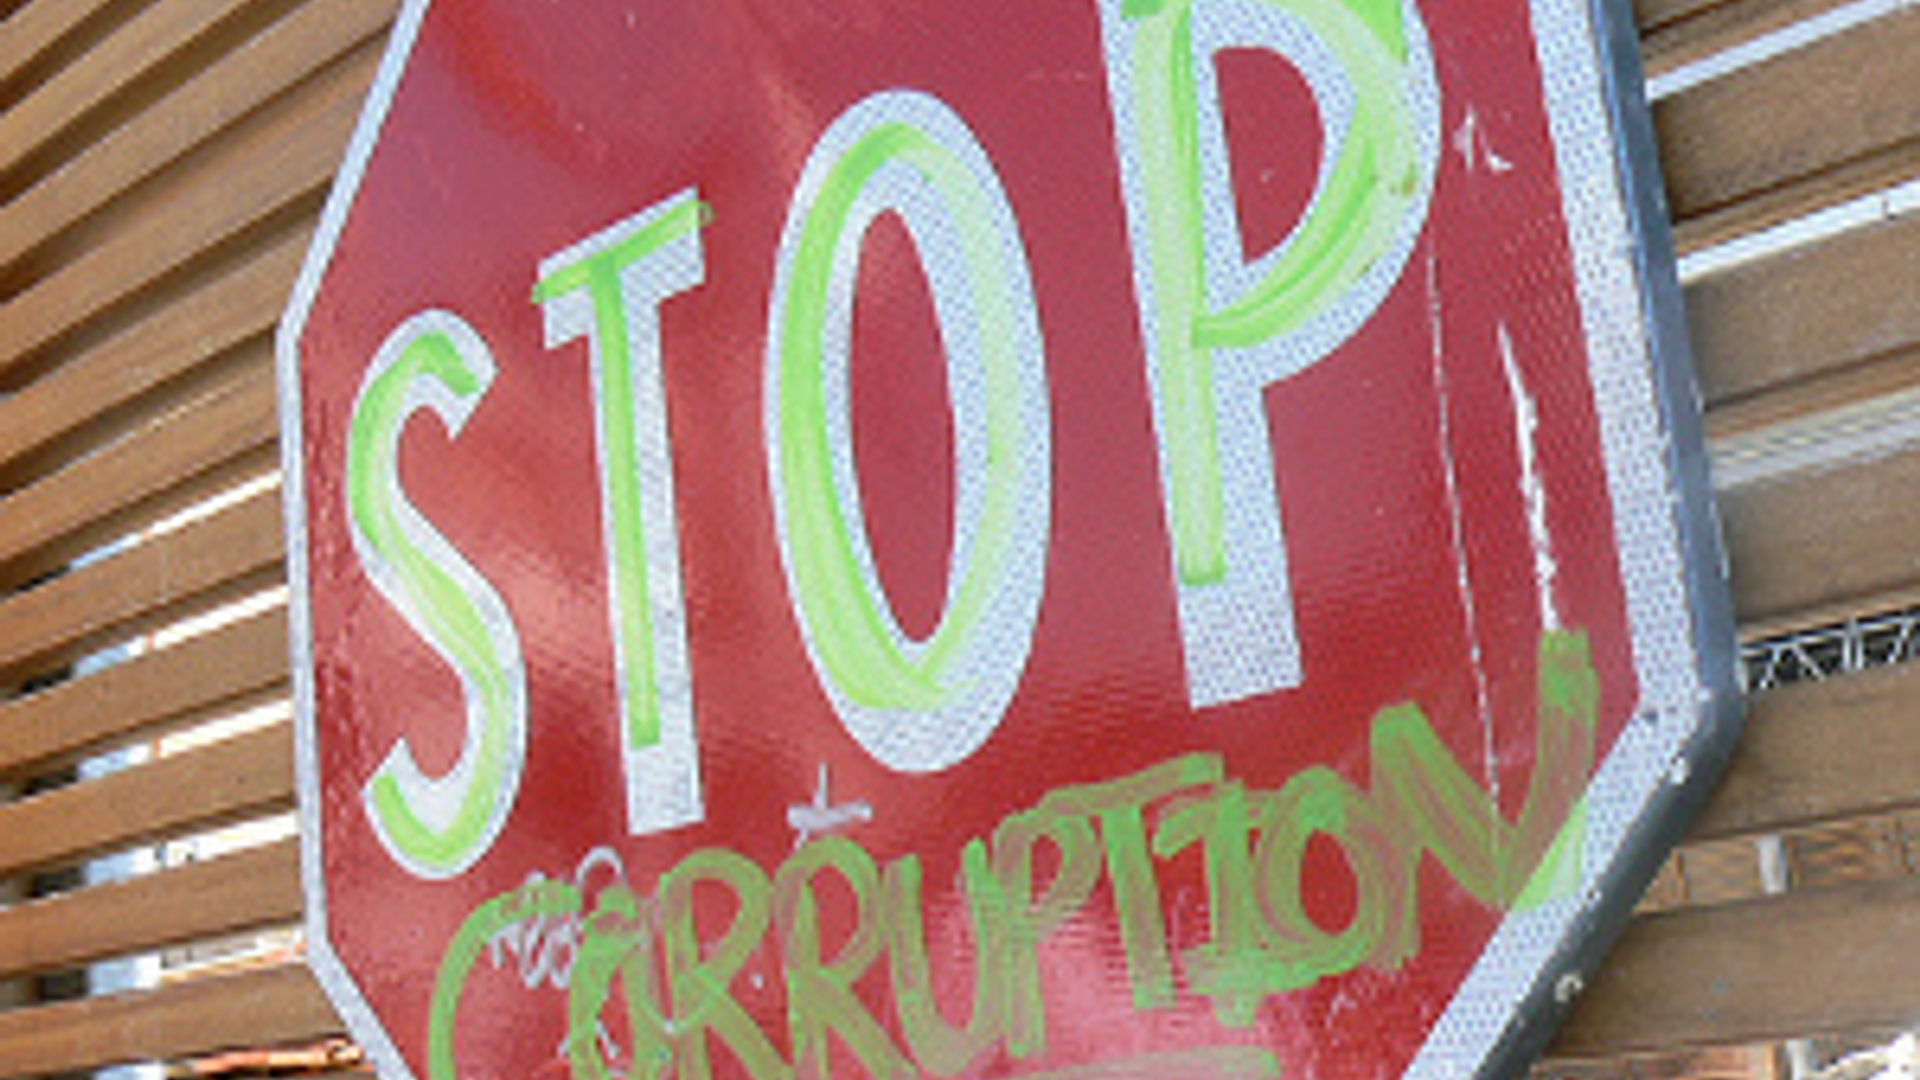 stop-corruption-sign.jpg